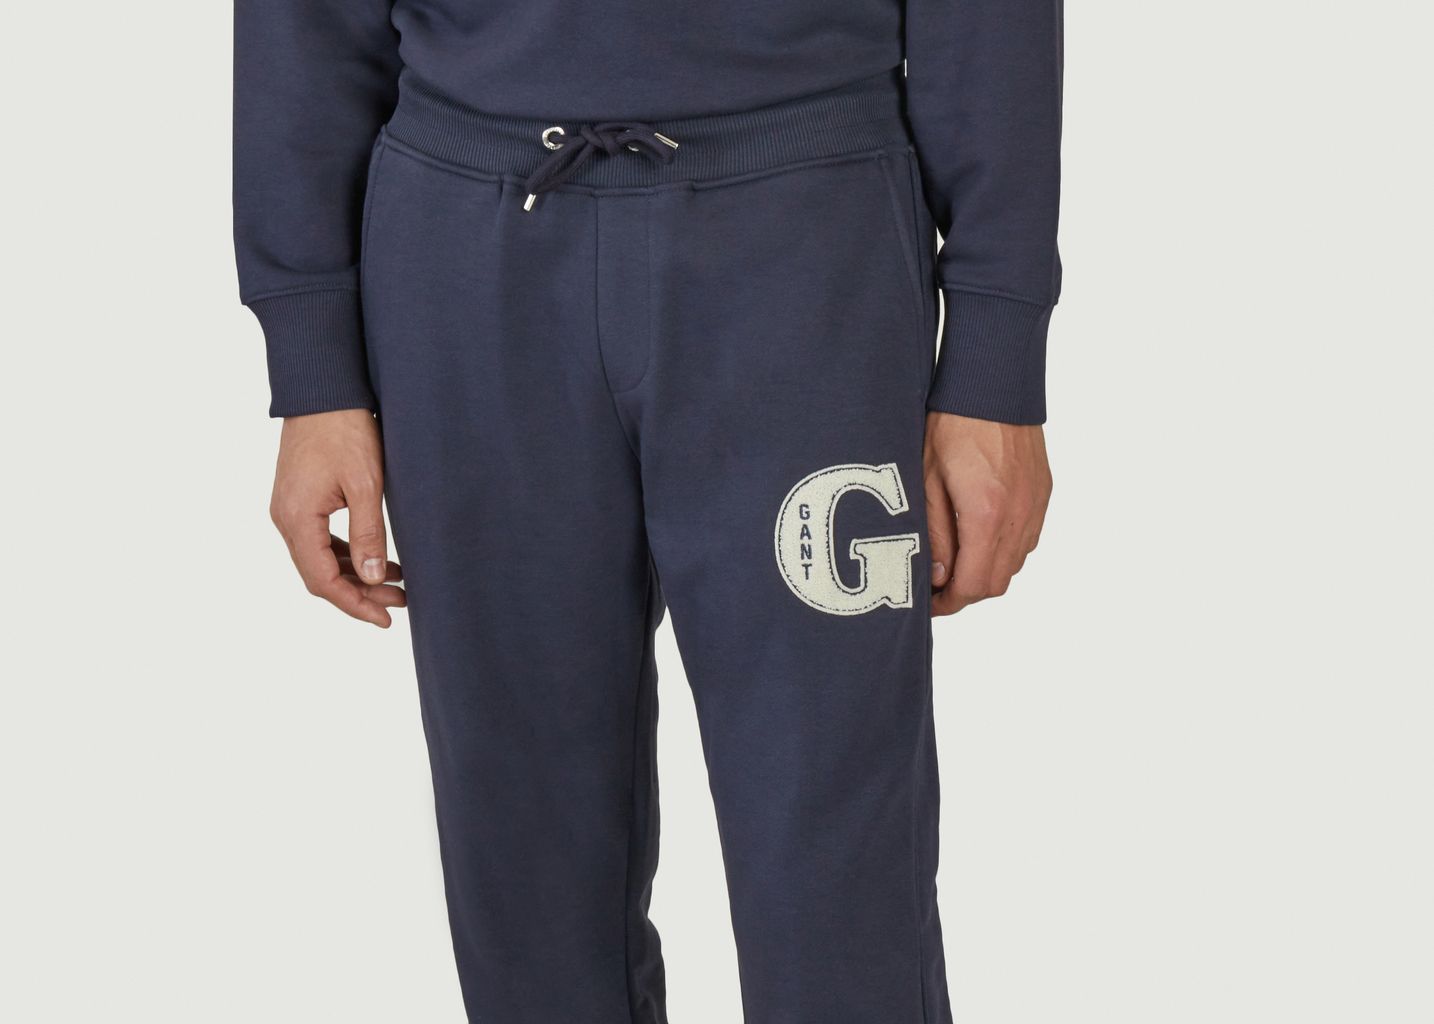 Pantalon Graphic G - Gant